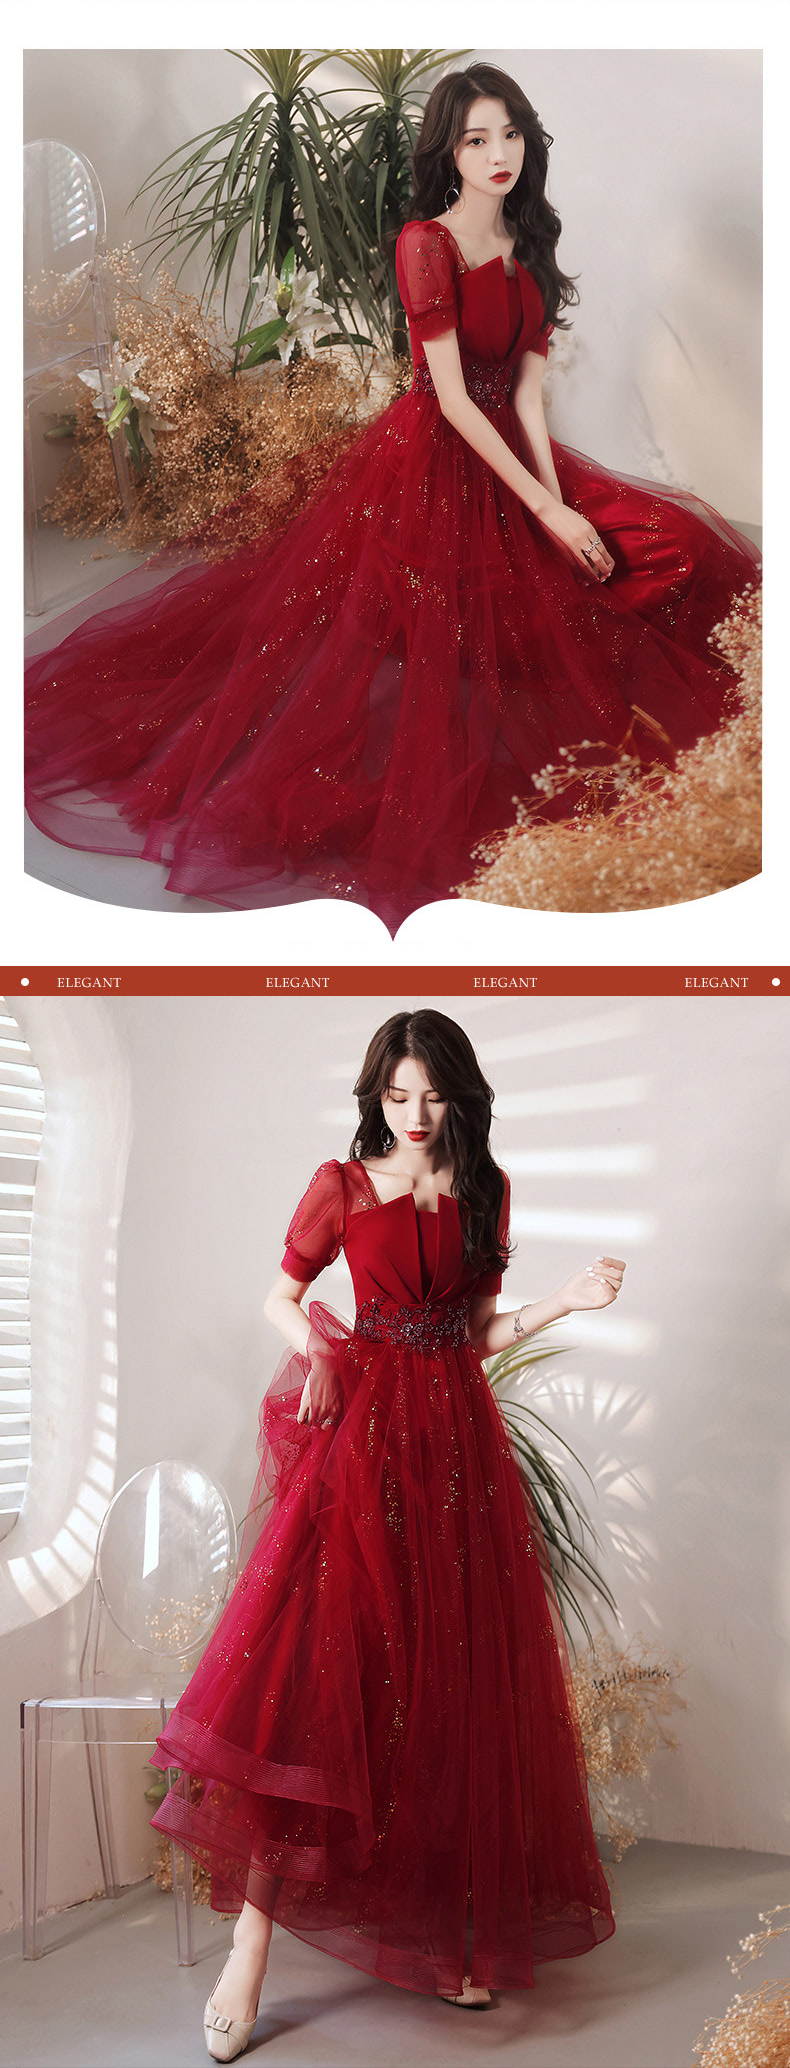 Elegant-Red-Wine-Chiffon-Long-Prom-Dress-Burgundy-Ball-Gown10